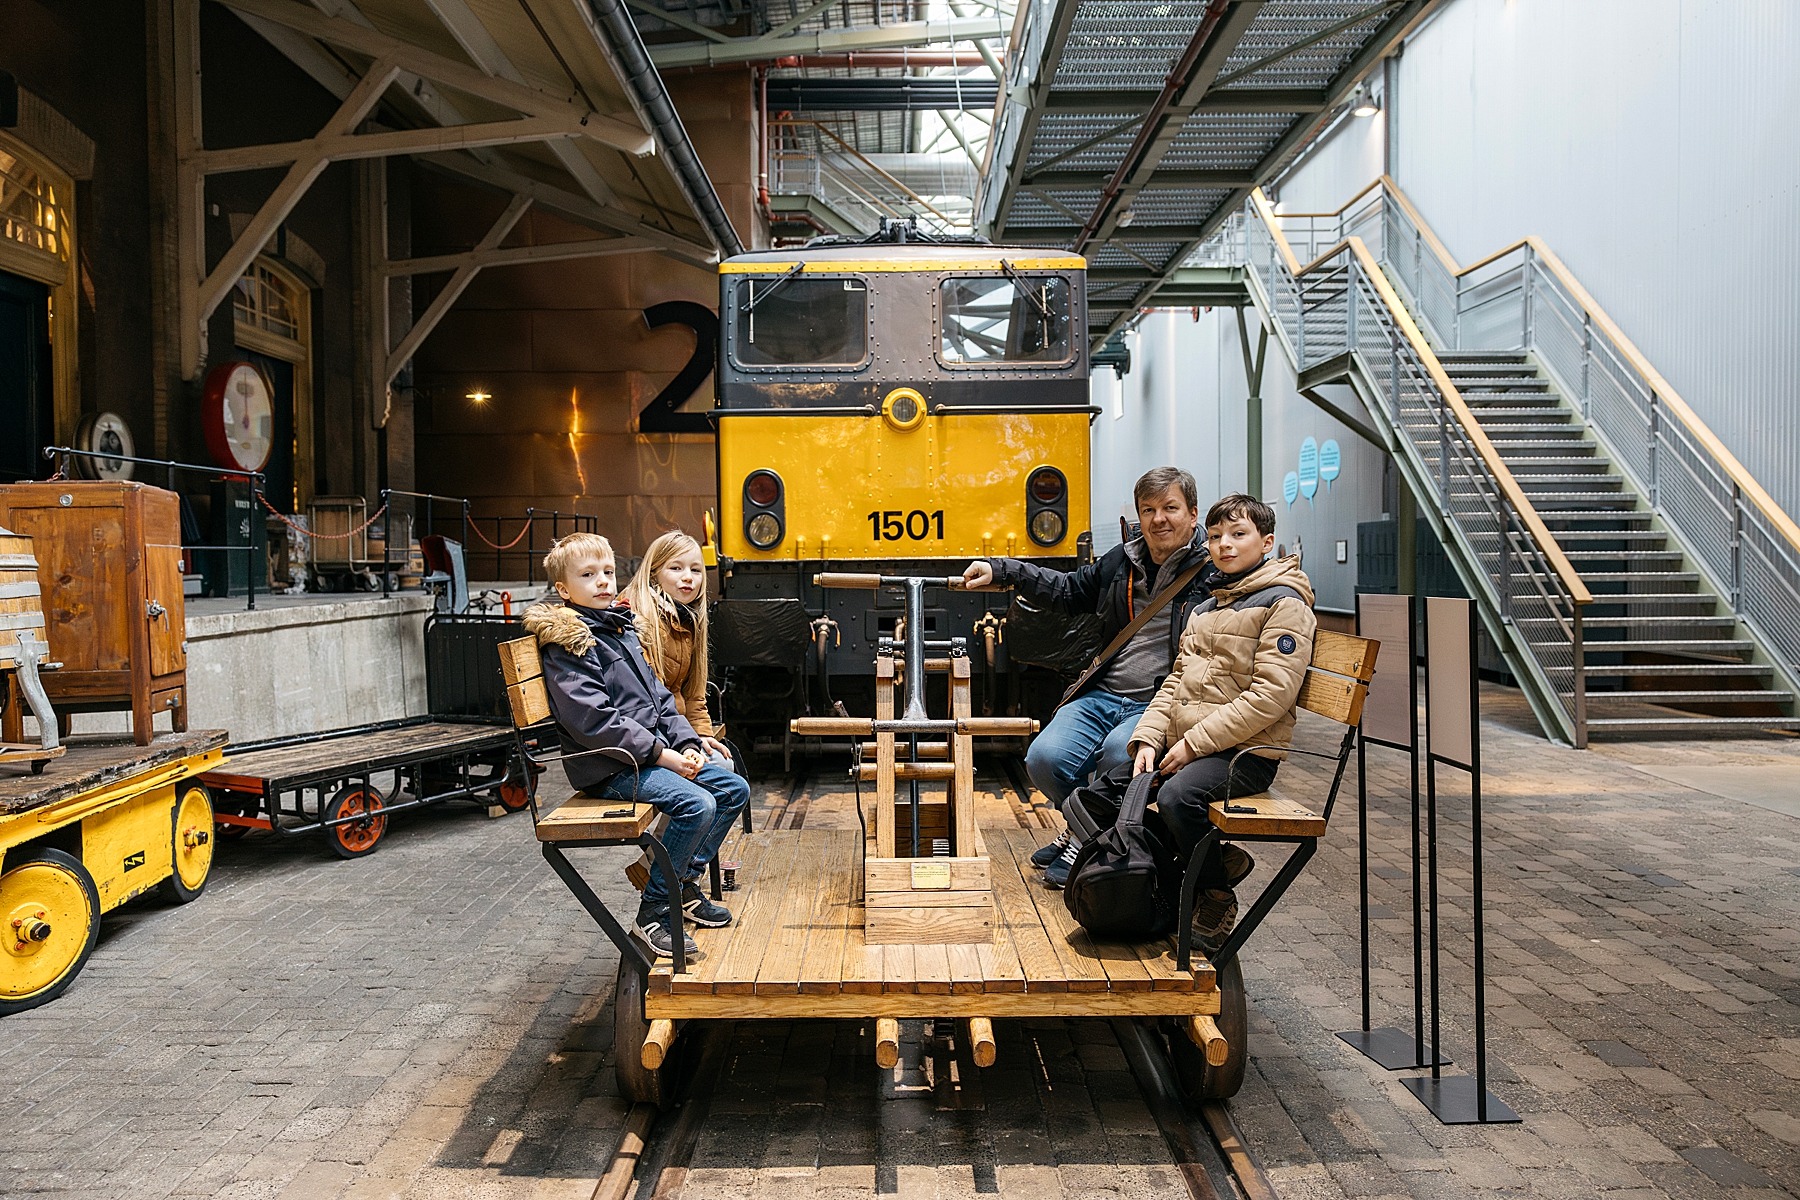 Spoorwegmuseum, l'incroyable musée du train de Utrecht 58